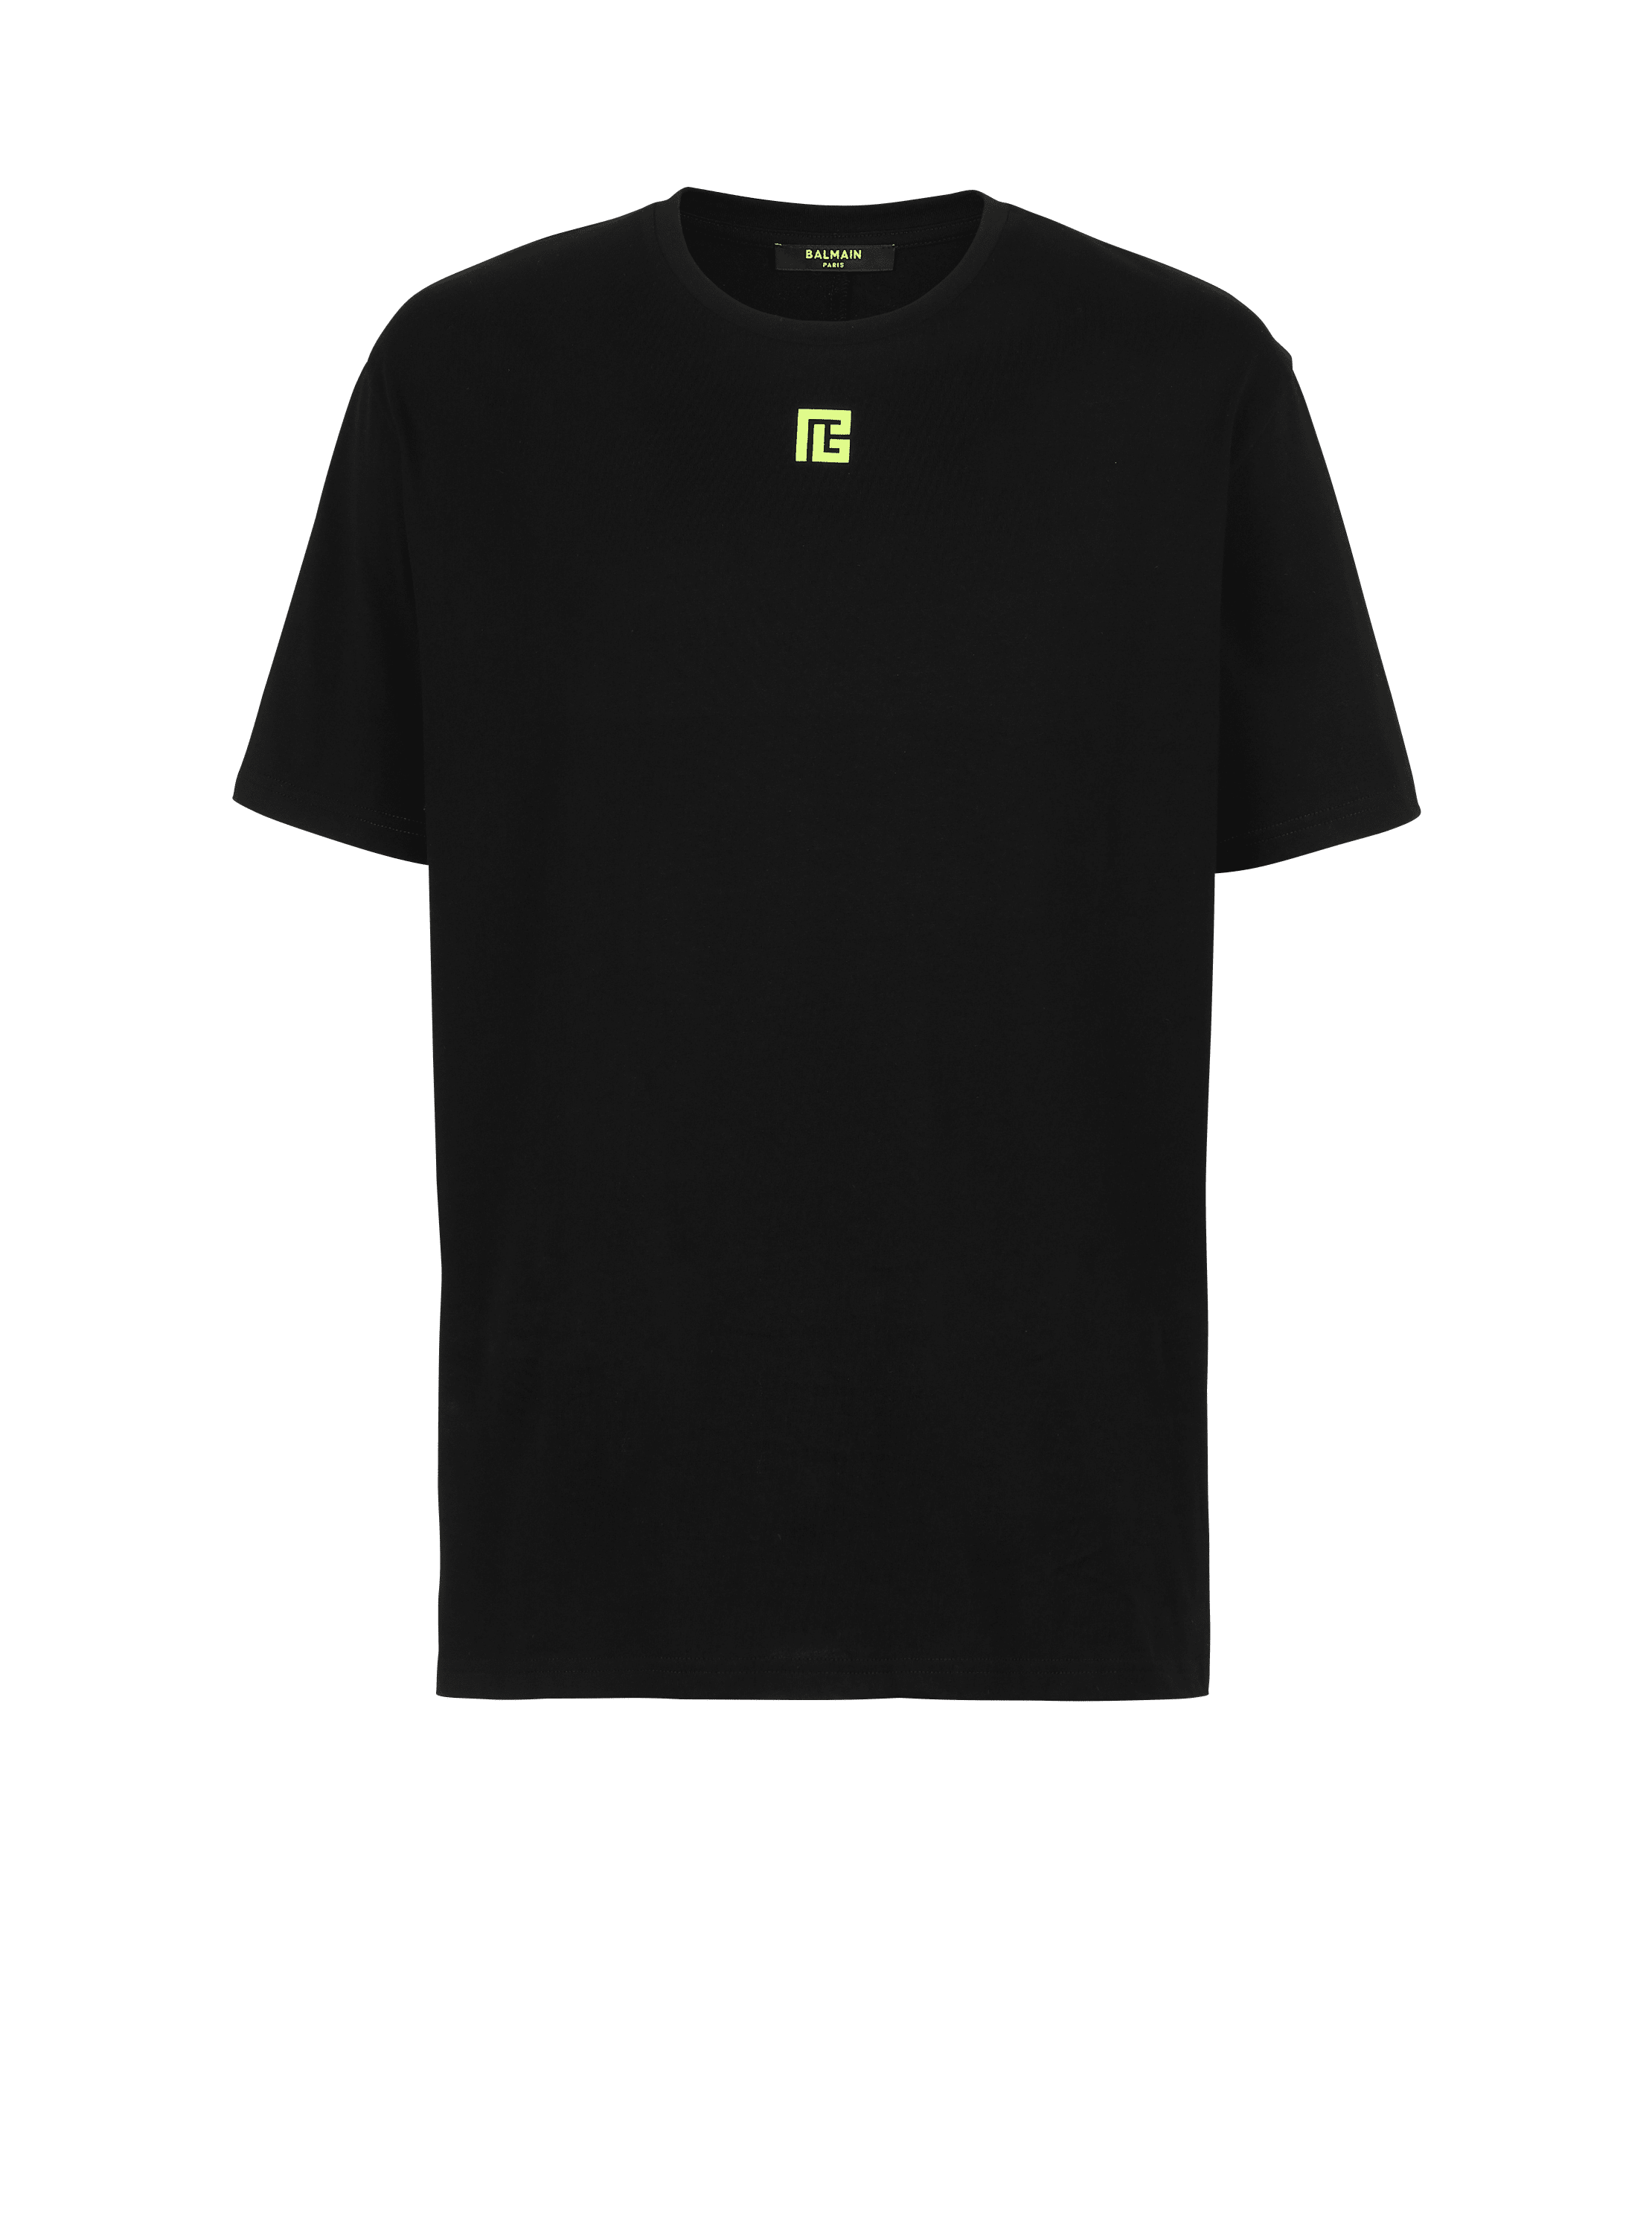 Cotton T-shirt with maxi Balmain logo print on back, black, hi-res